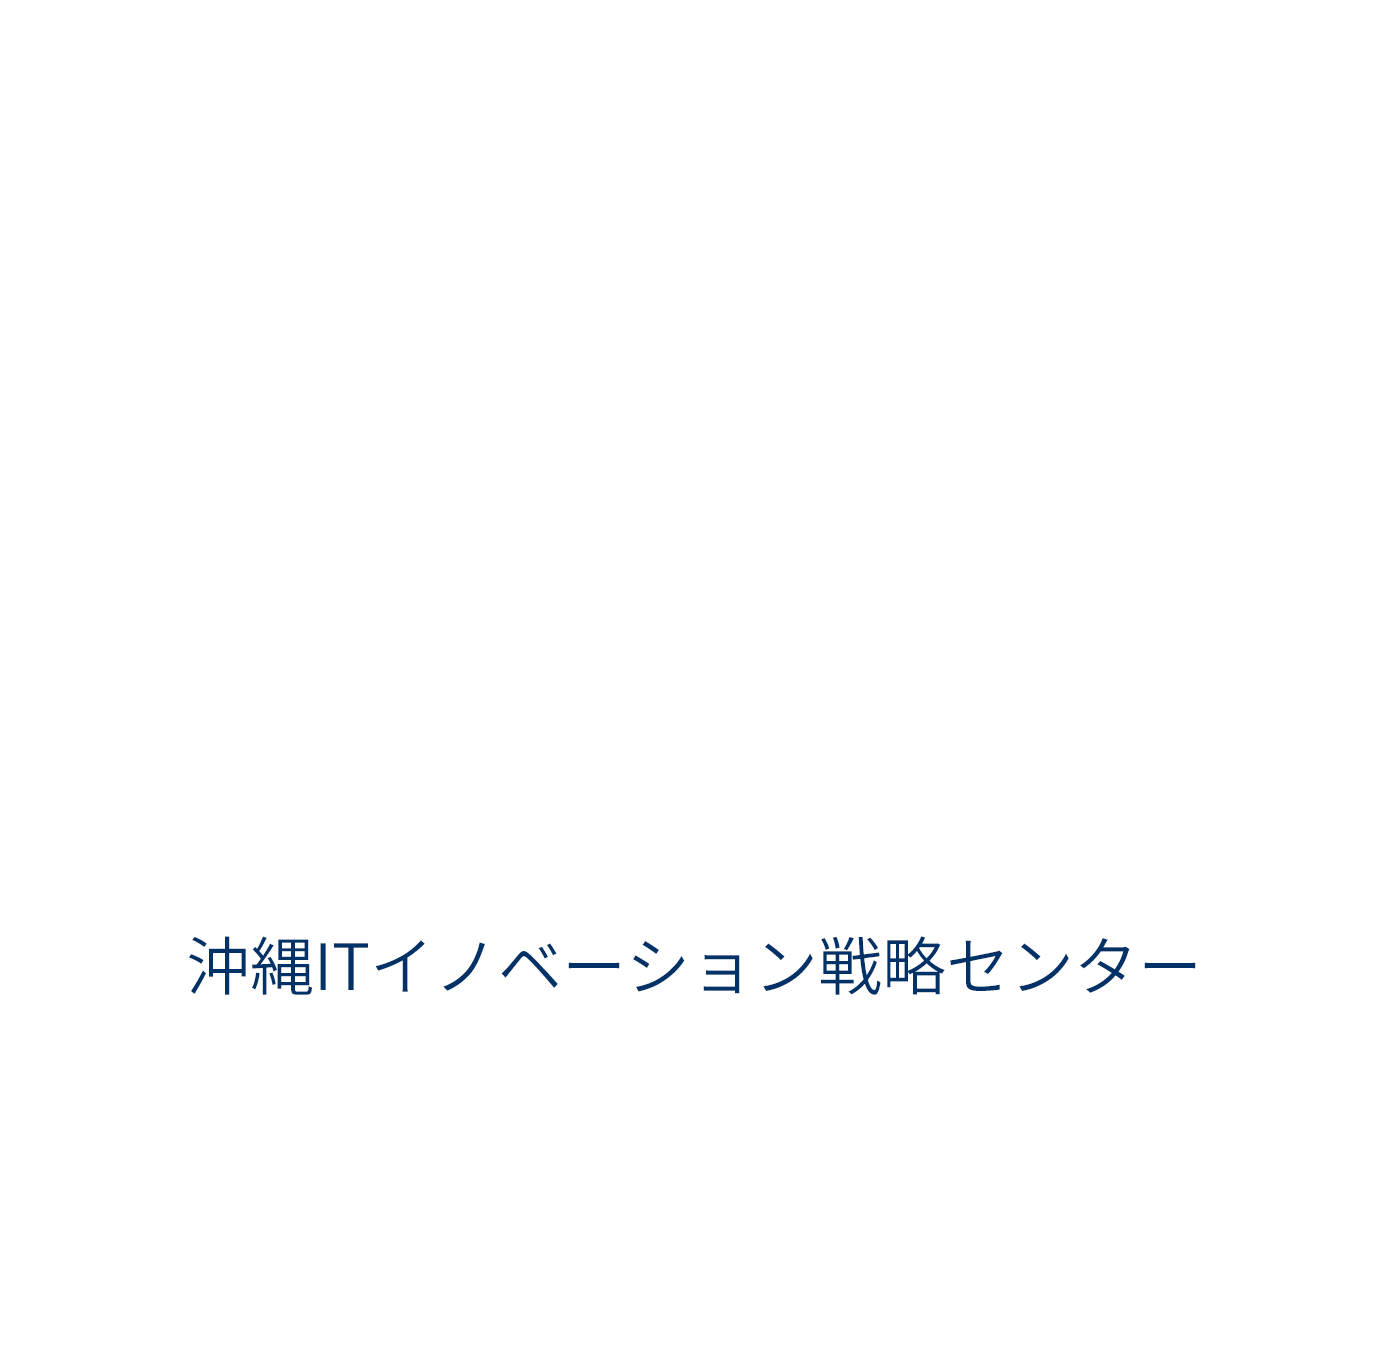 IT Innovation and Strategy Center Okinawa「沖縄ITイノベーション戦略センター」 | 我們將『在沖繩』共同開創一場活用IT革新，並引領顛覆性創造的服務及產業。